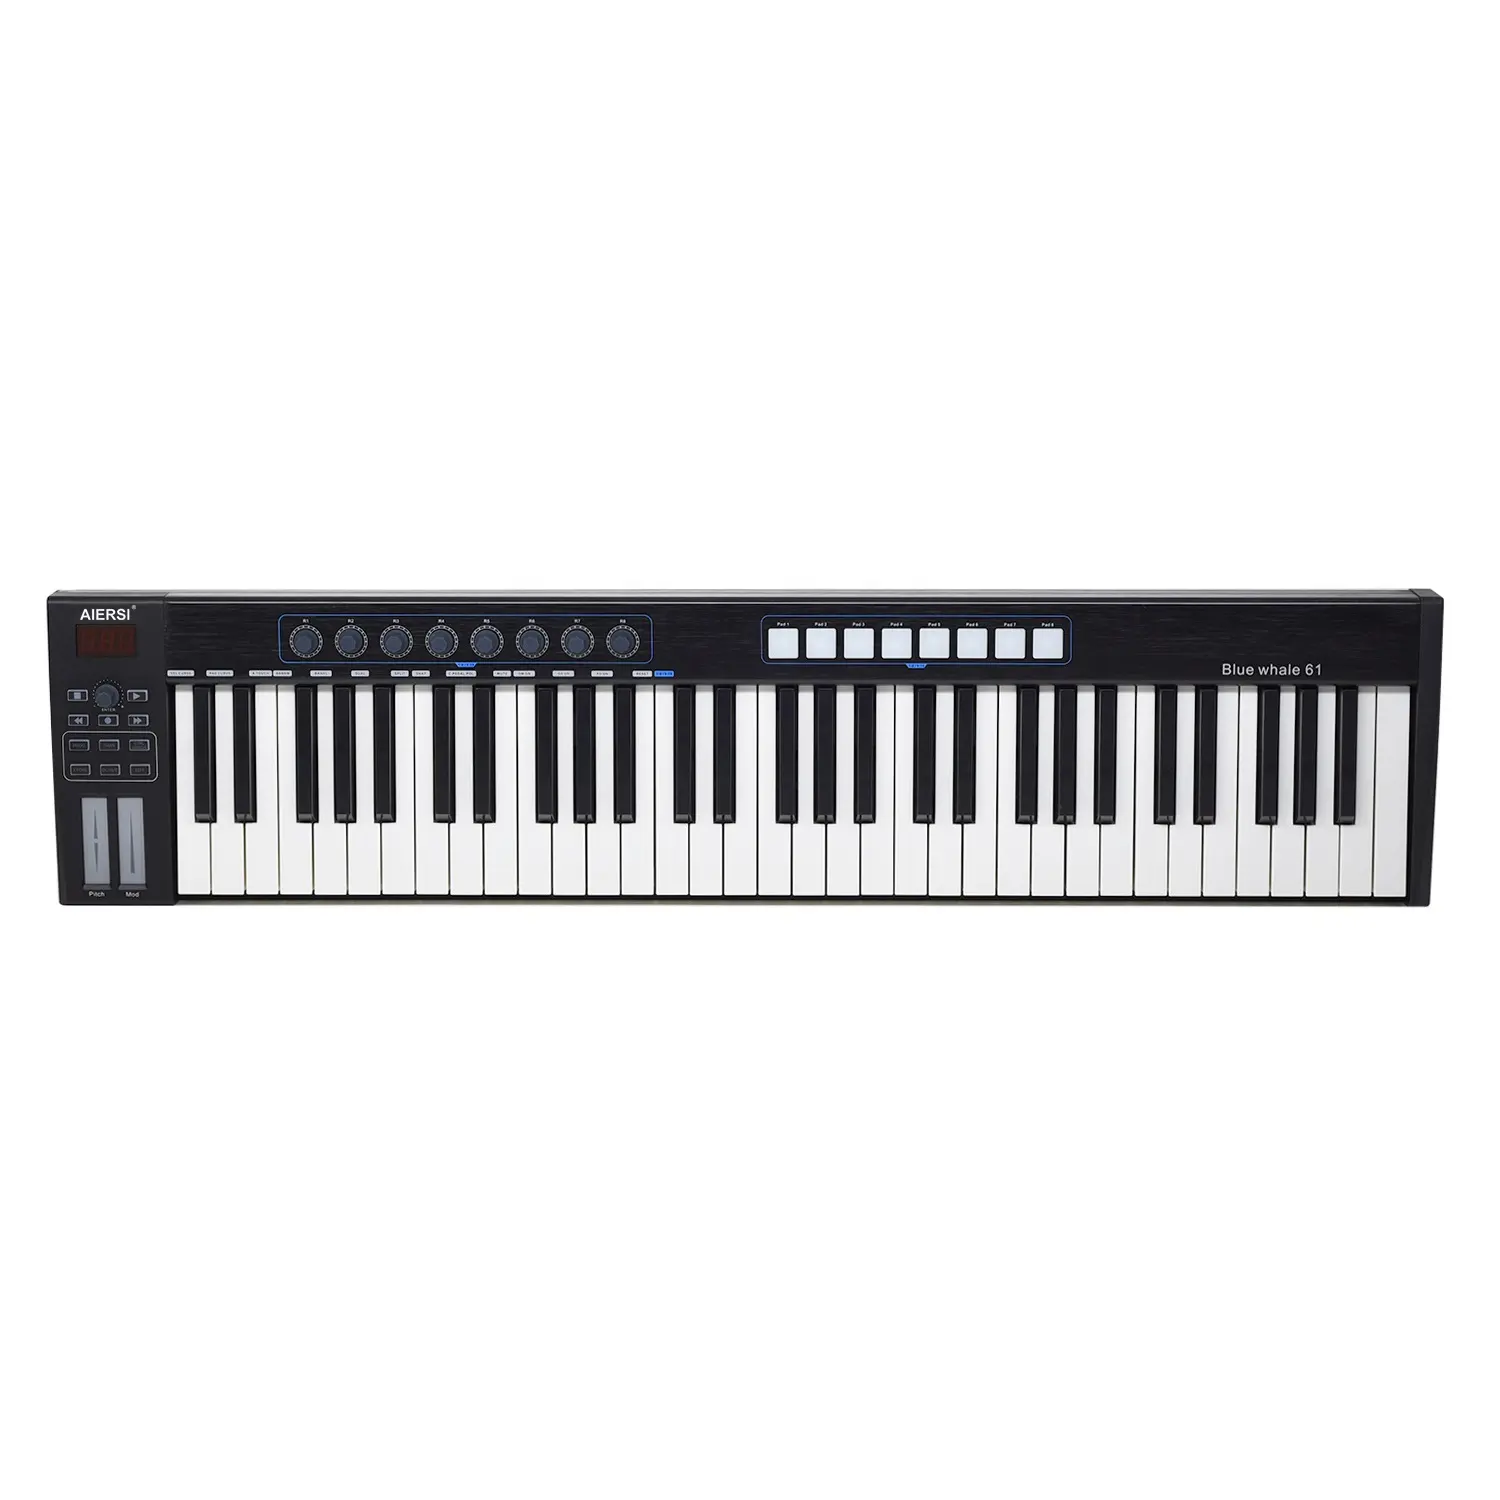 Aiersi brand quality professional midi controller 61 keys USB midi piano keyboard musical instrument synthesizer music